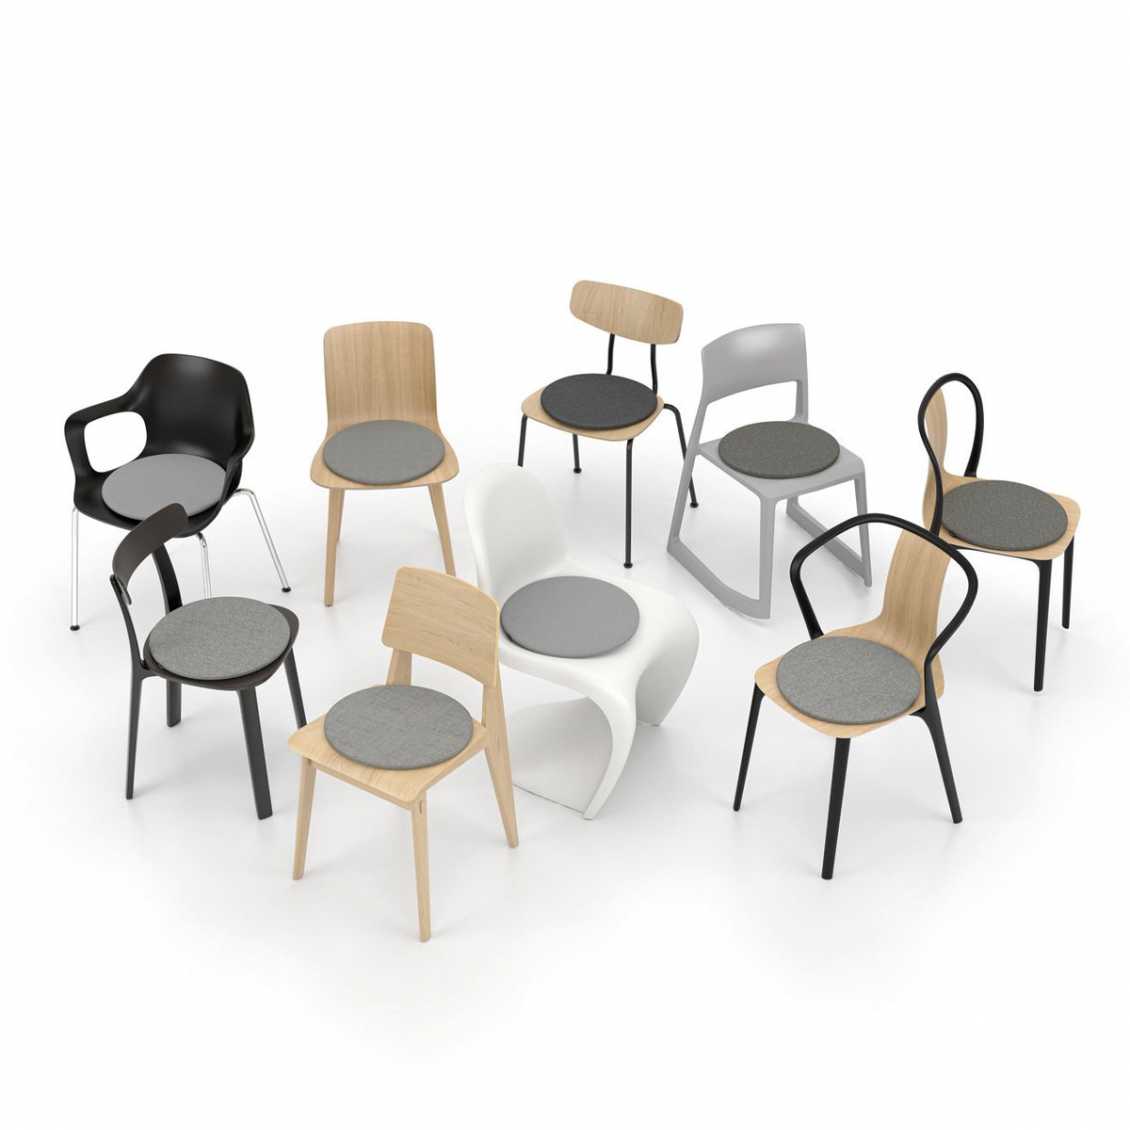 https://www.fundesign.nl/media/catalog/product/6/1/6140447_soft-seats-type-c_-matching-chairs_v_fullbleed_1440x_2.jpg